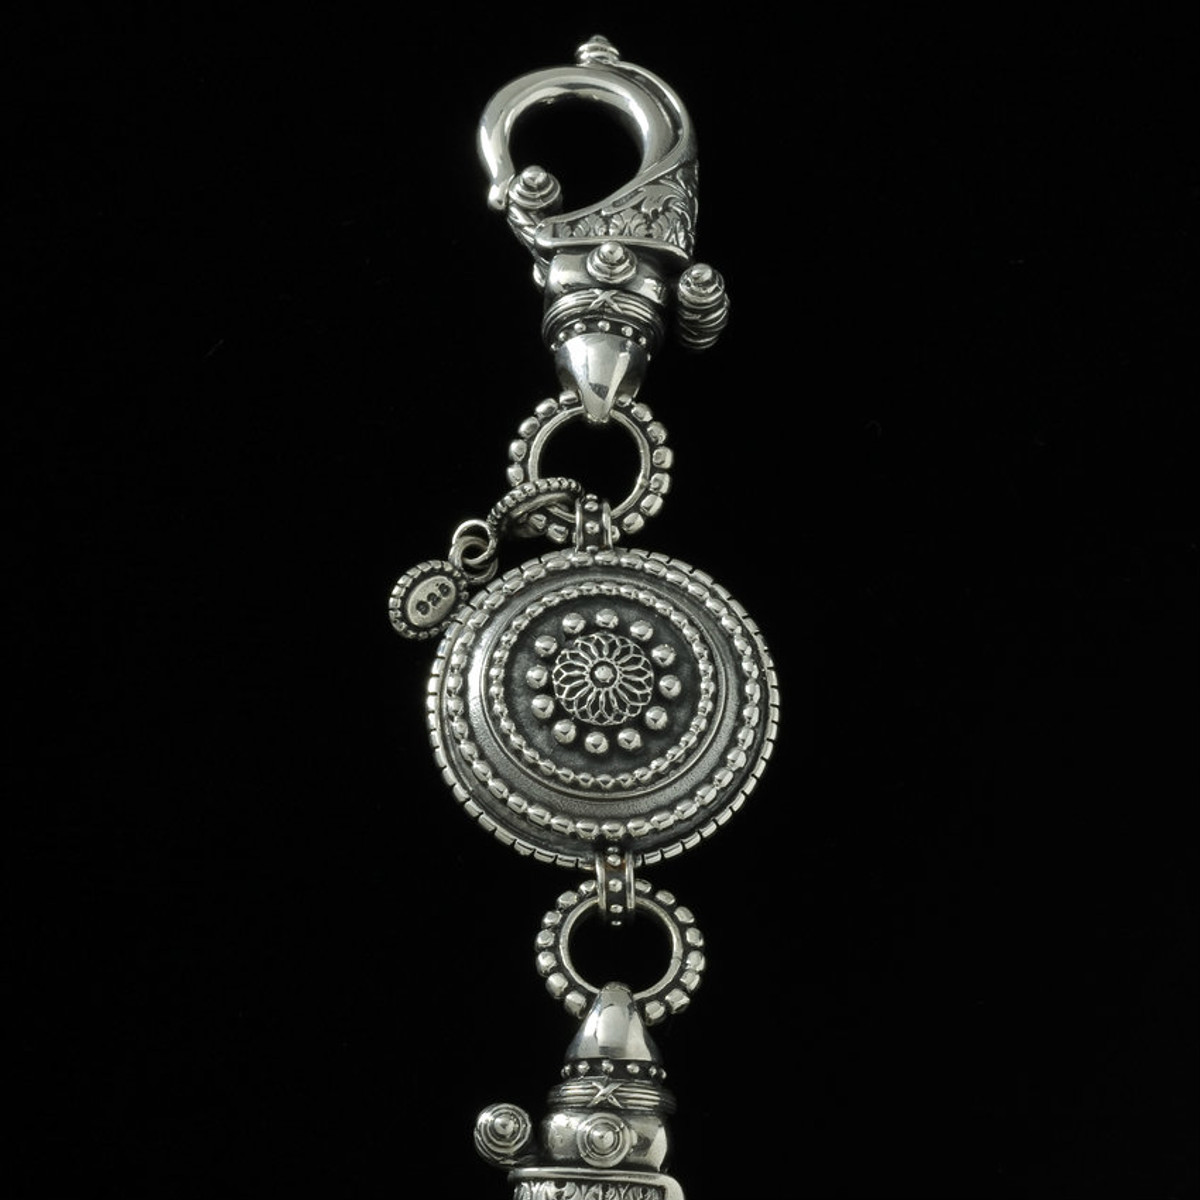 Key Chain in Silver handmade by Bowman Originals, USA